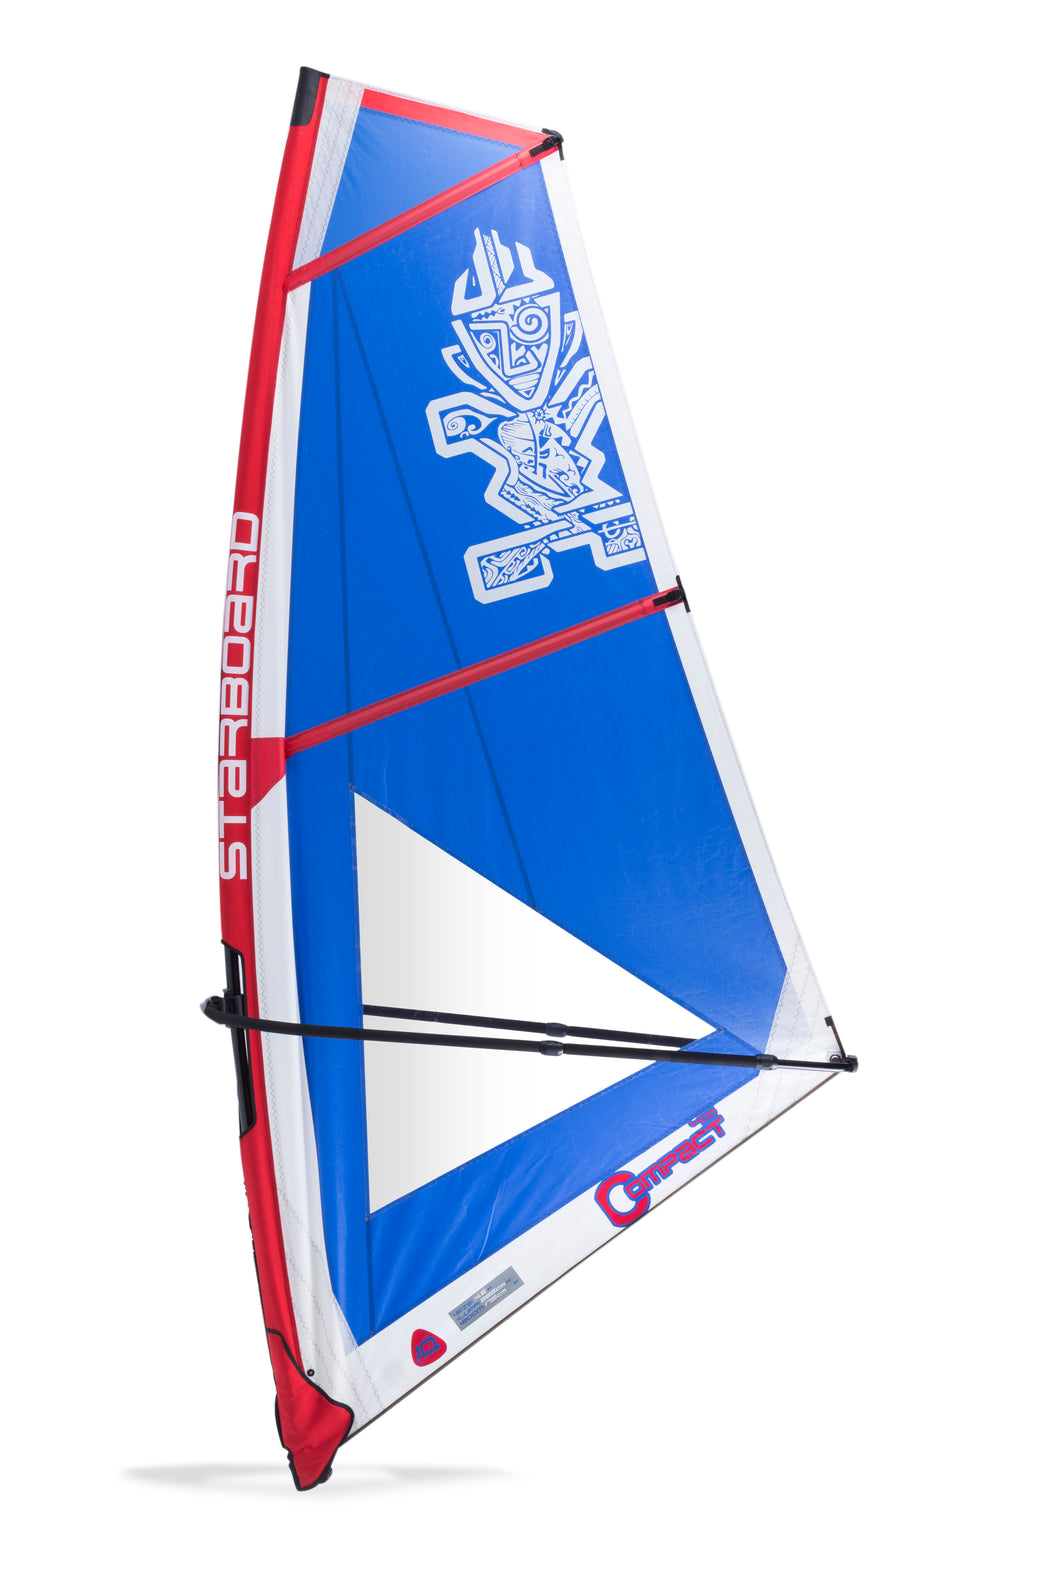 Windsup Windsurfing Sail Compact Package